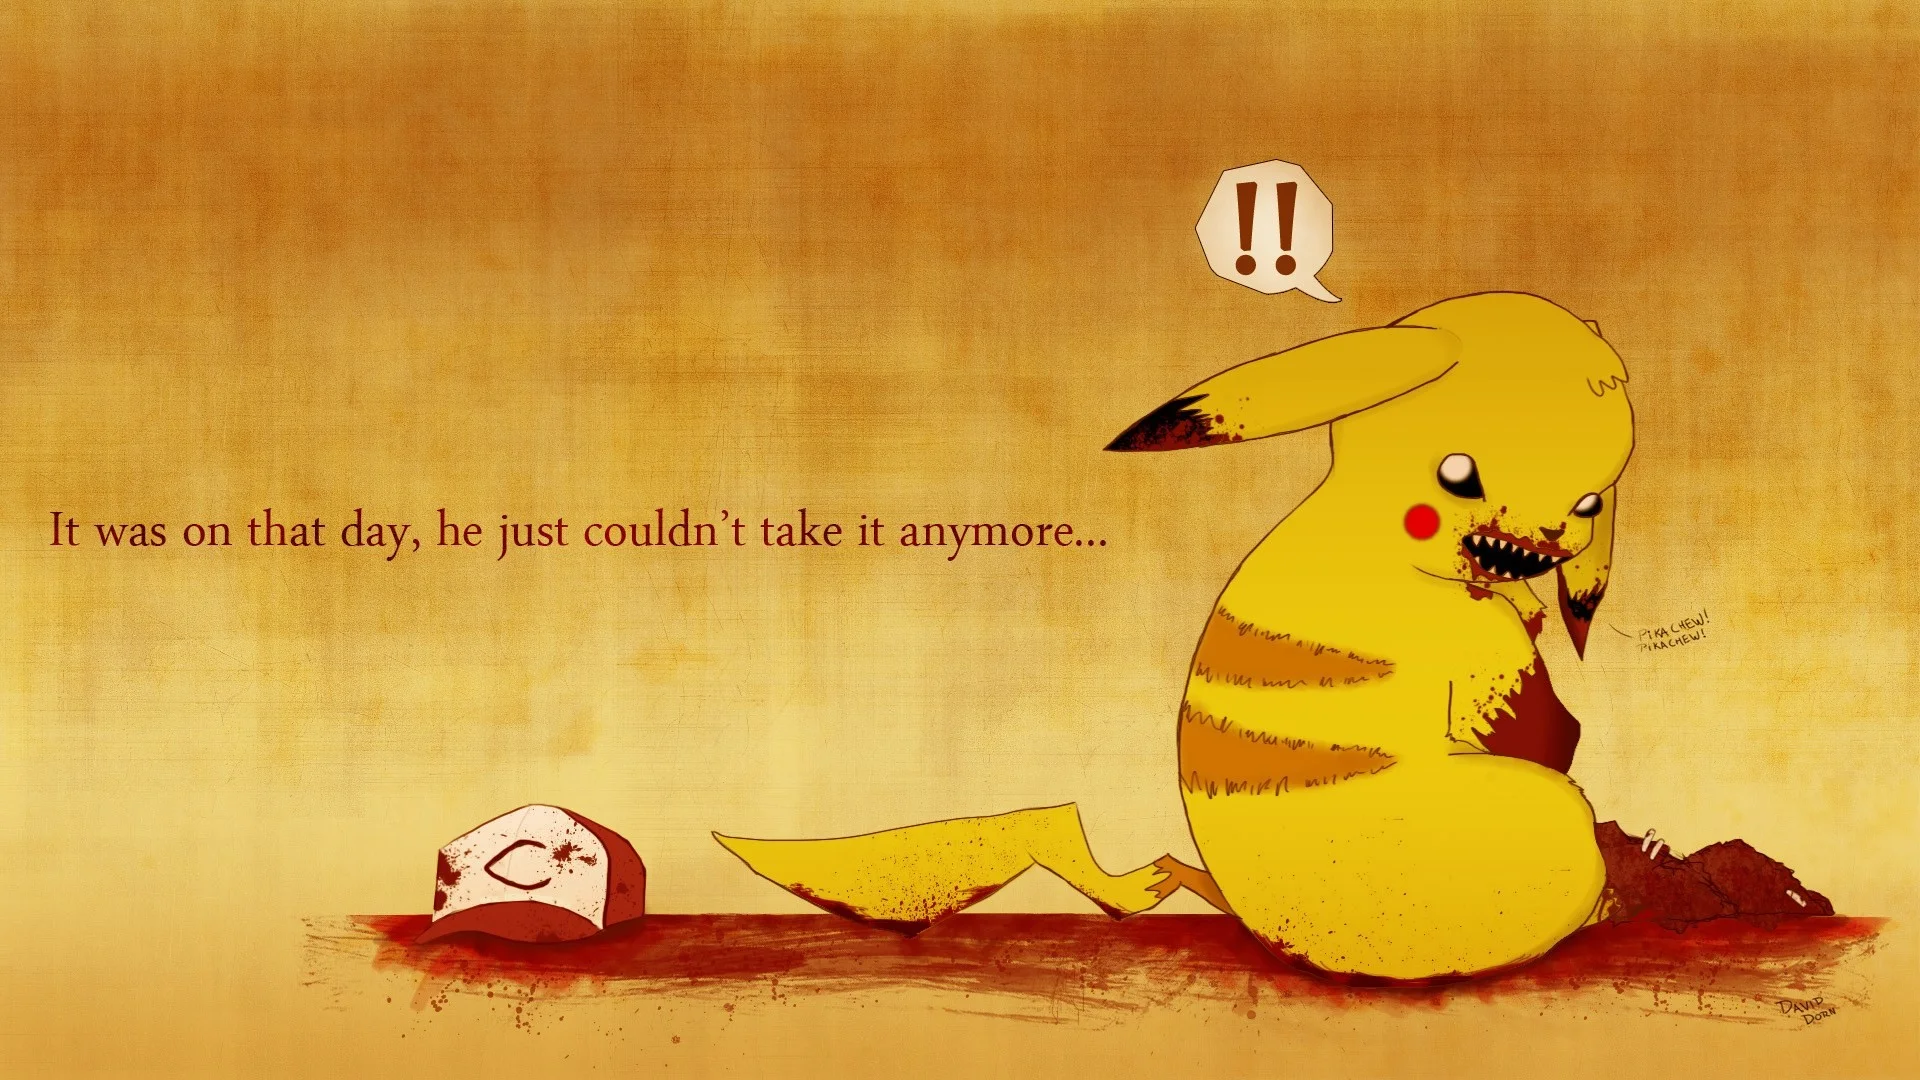 Pikachu desktop wallpaper pictures free